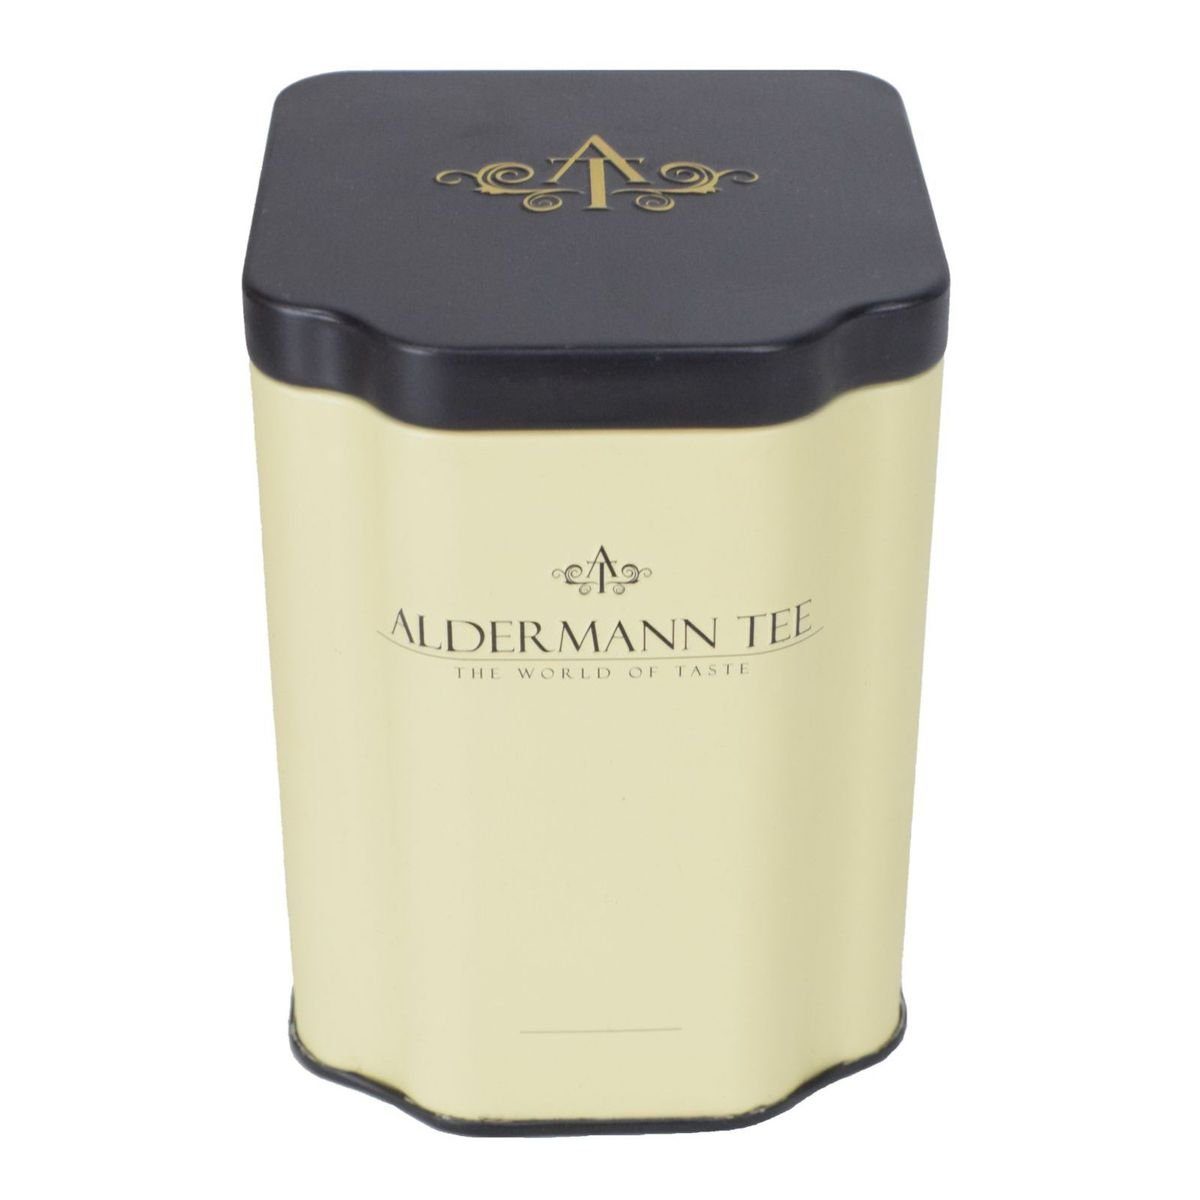 Teebox "Aldermann Tee" Teedose, schwarzer Deckel, 8x8x11 cm Gewürze, Metall